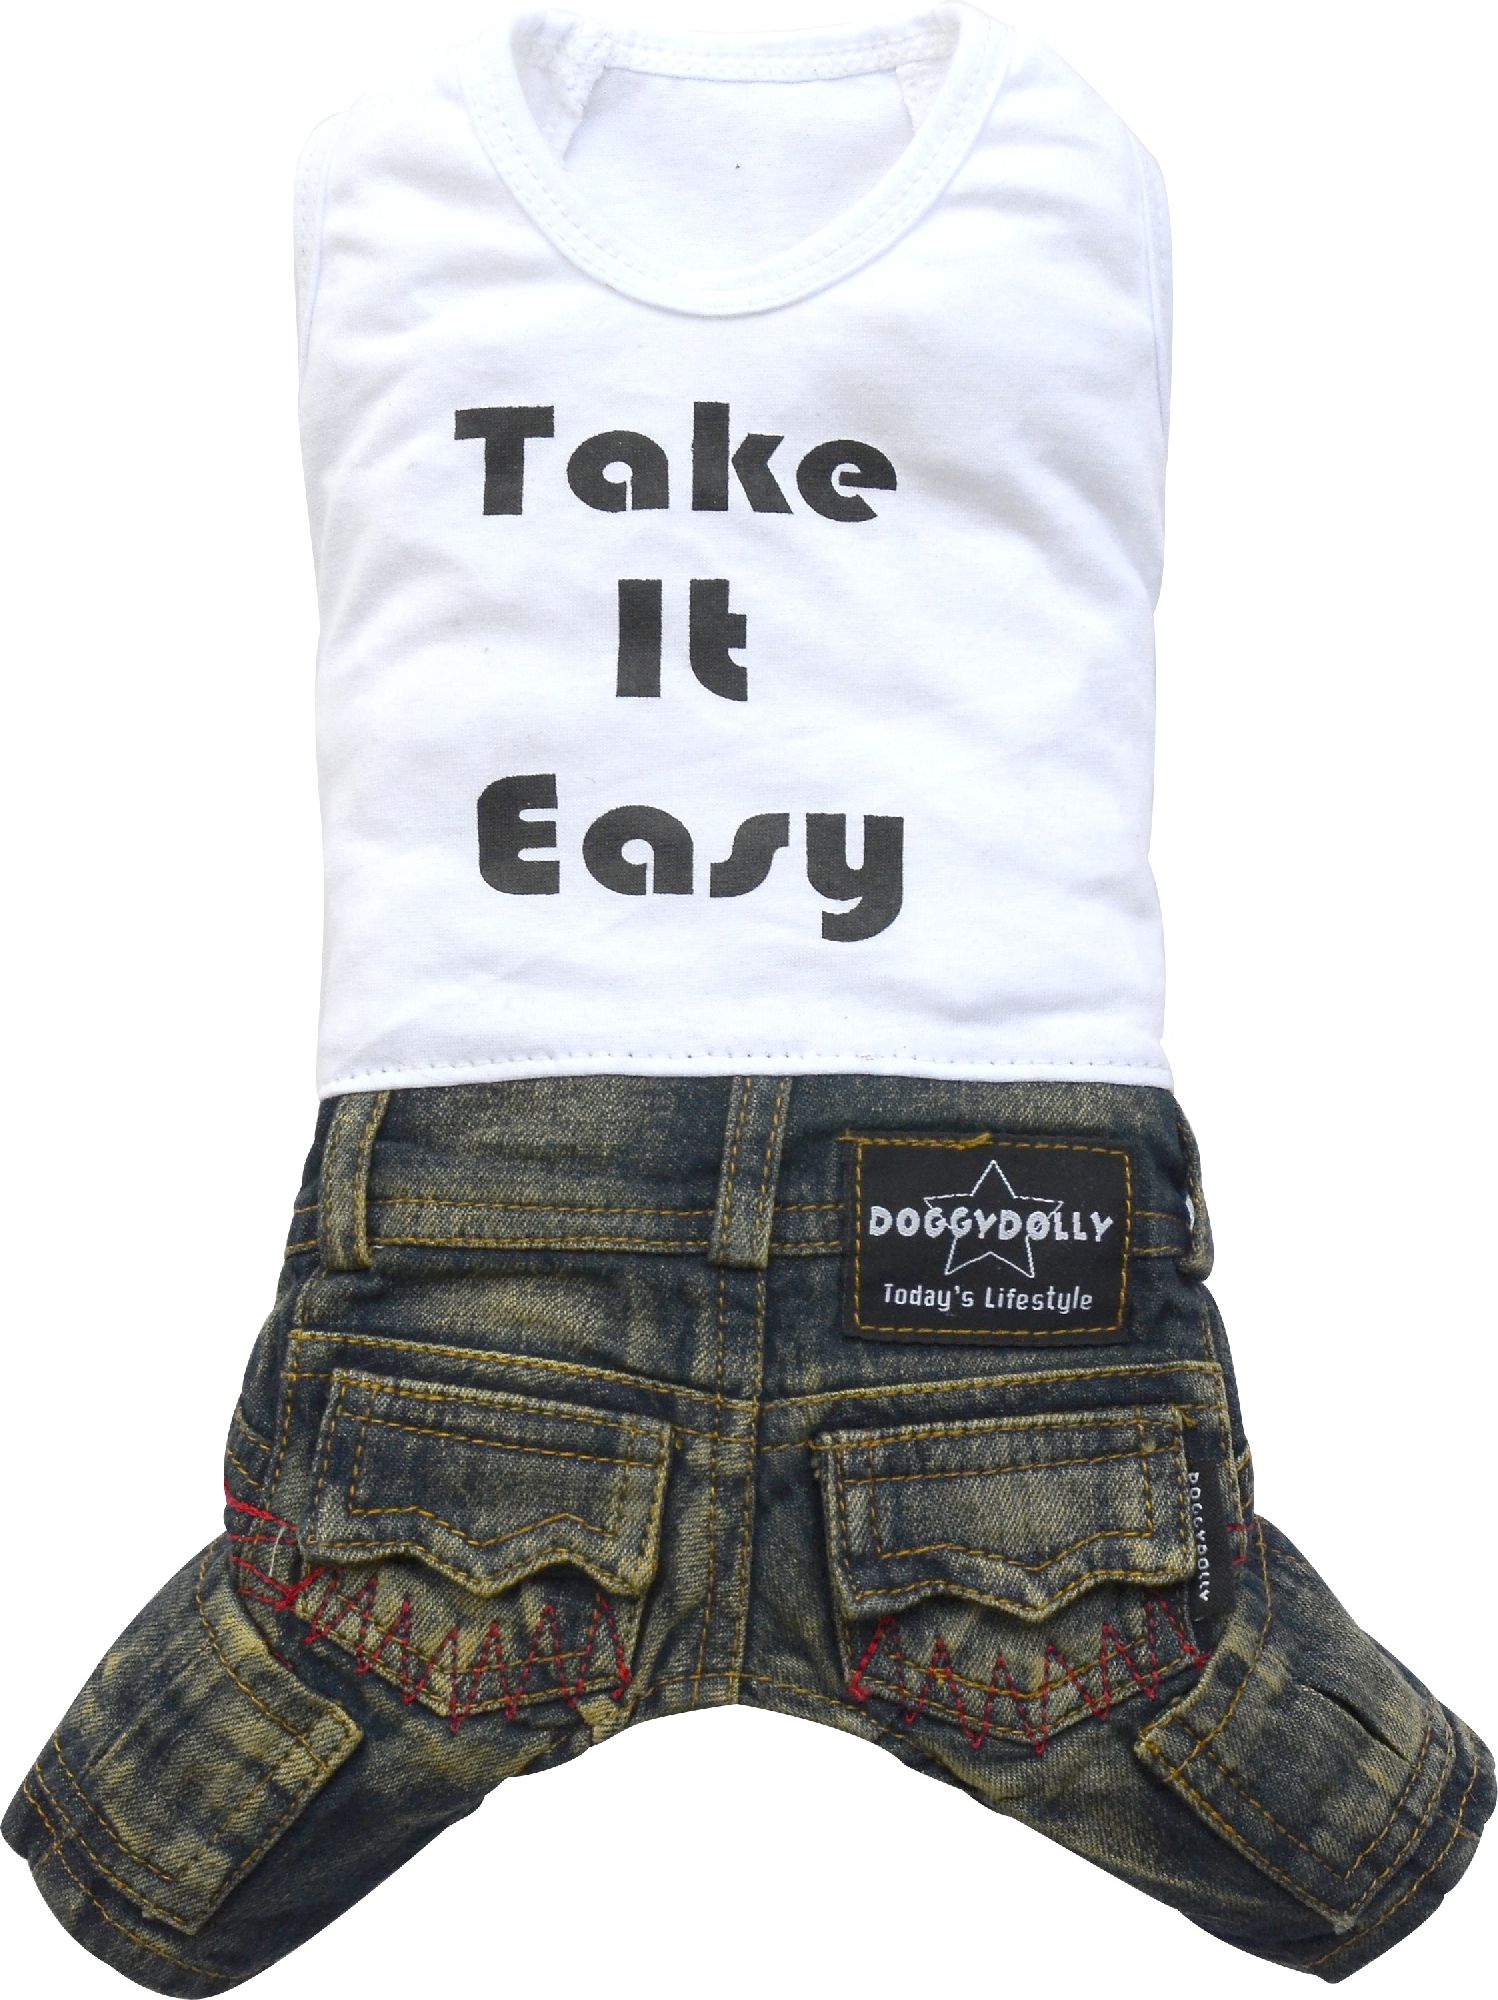 DoggyDolly Komplet jeans z t-shirtem, bialy,S 23-25cm/36-38cm DD-C225-S (8859122700730)